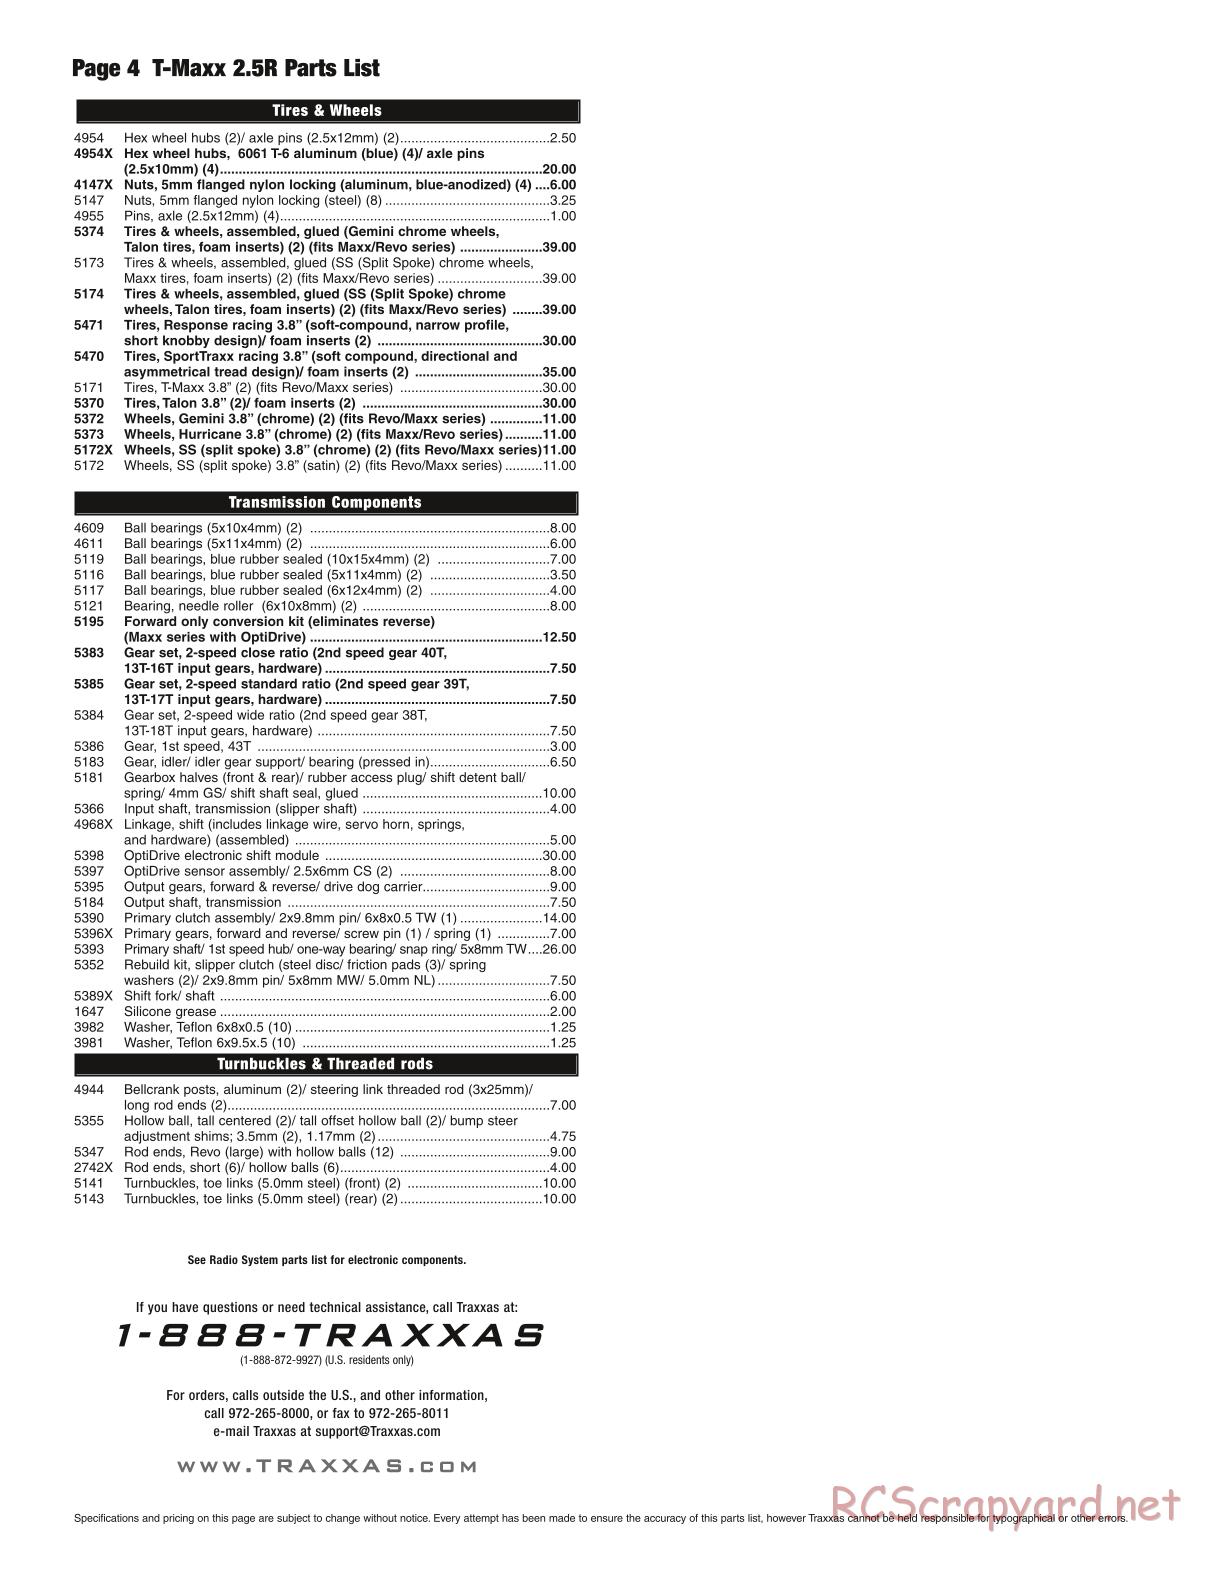 Traxxas - T-Maxx 2.5R (2006) - Parts List - Page 4